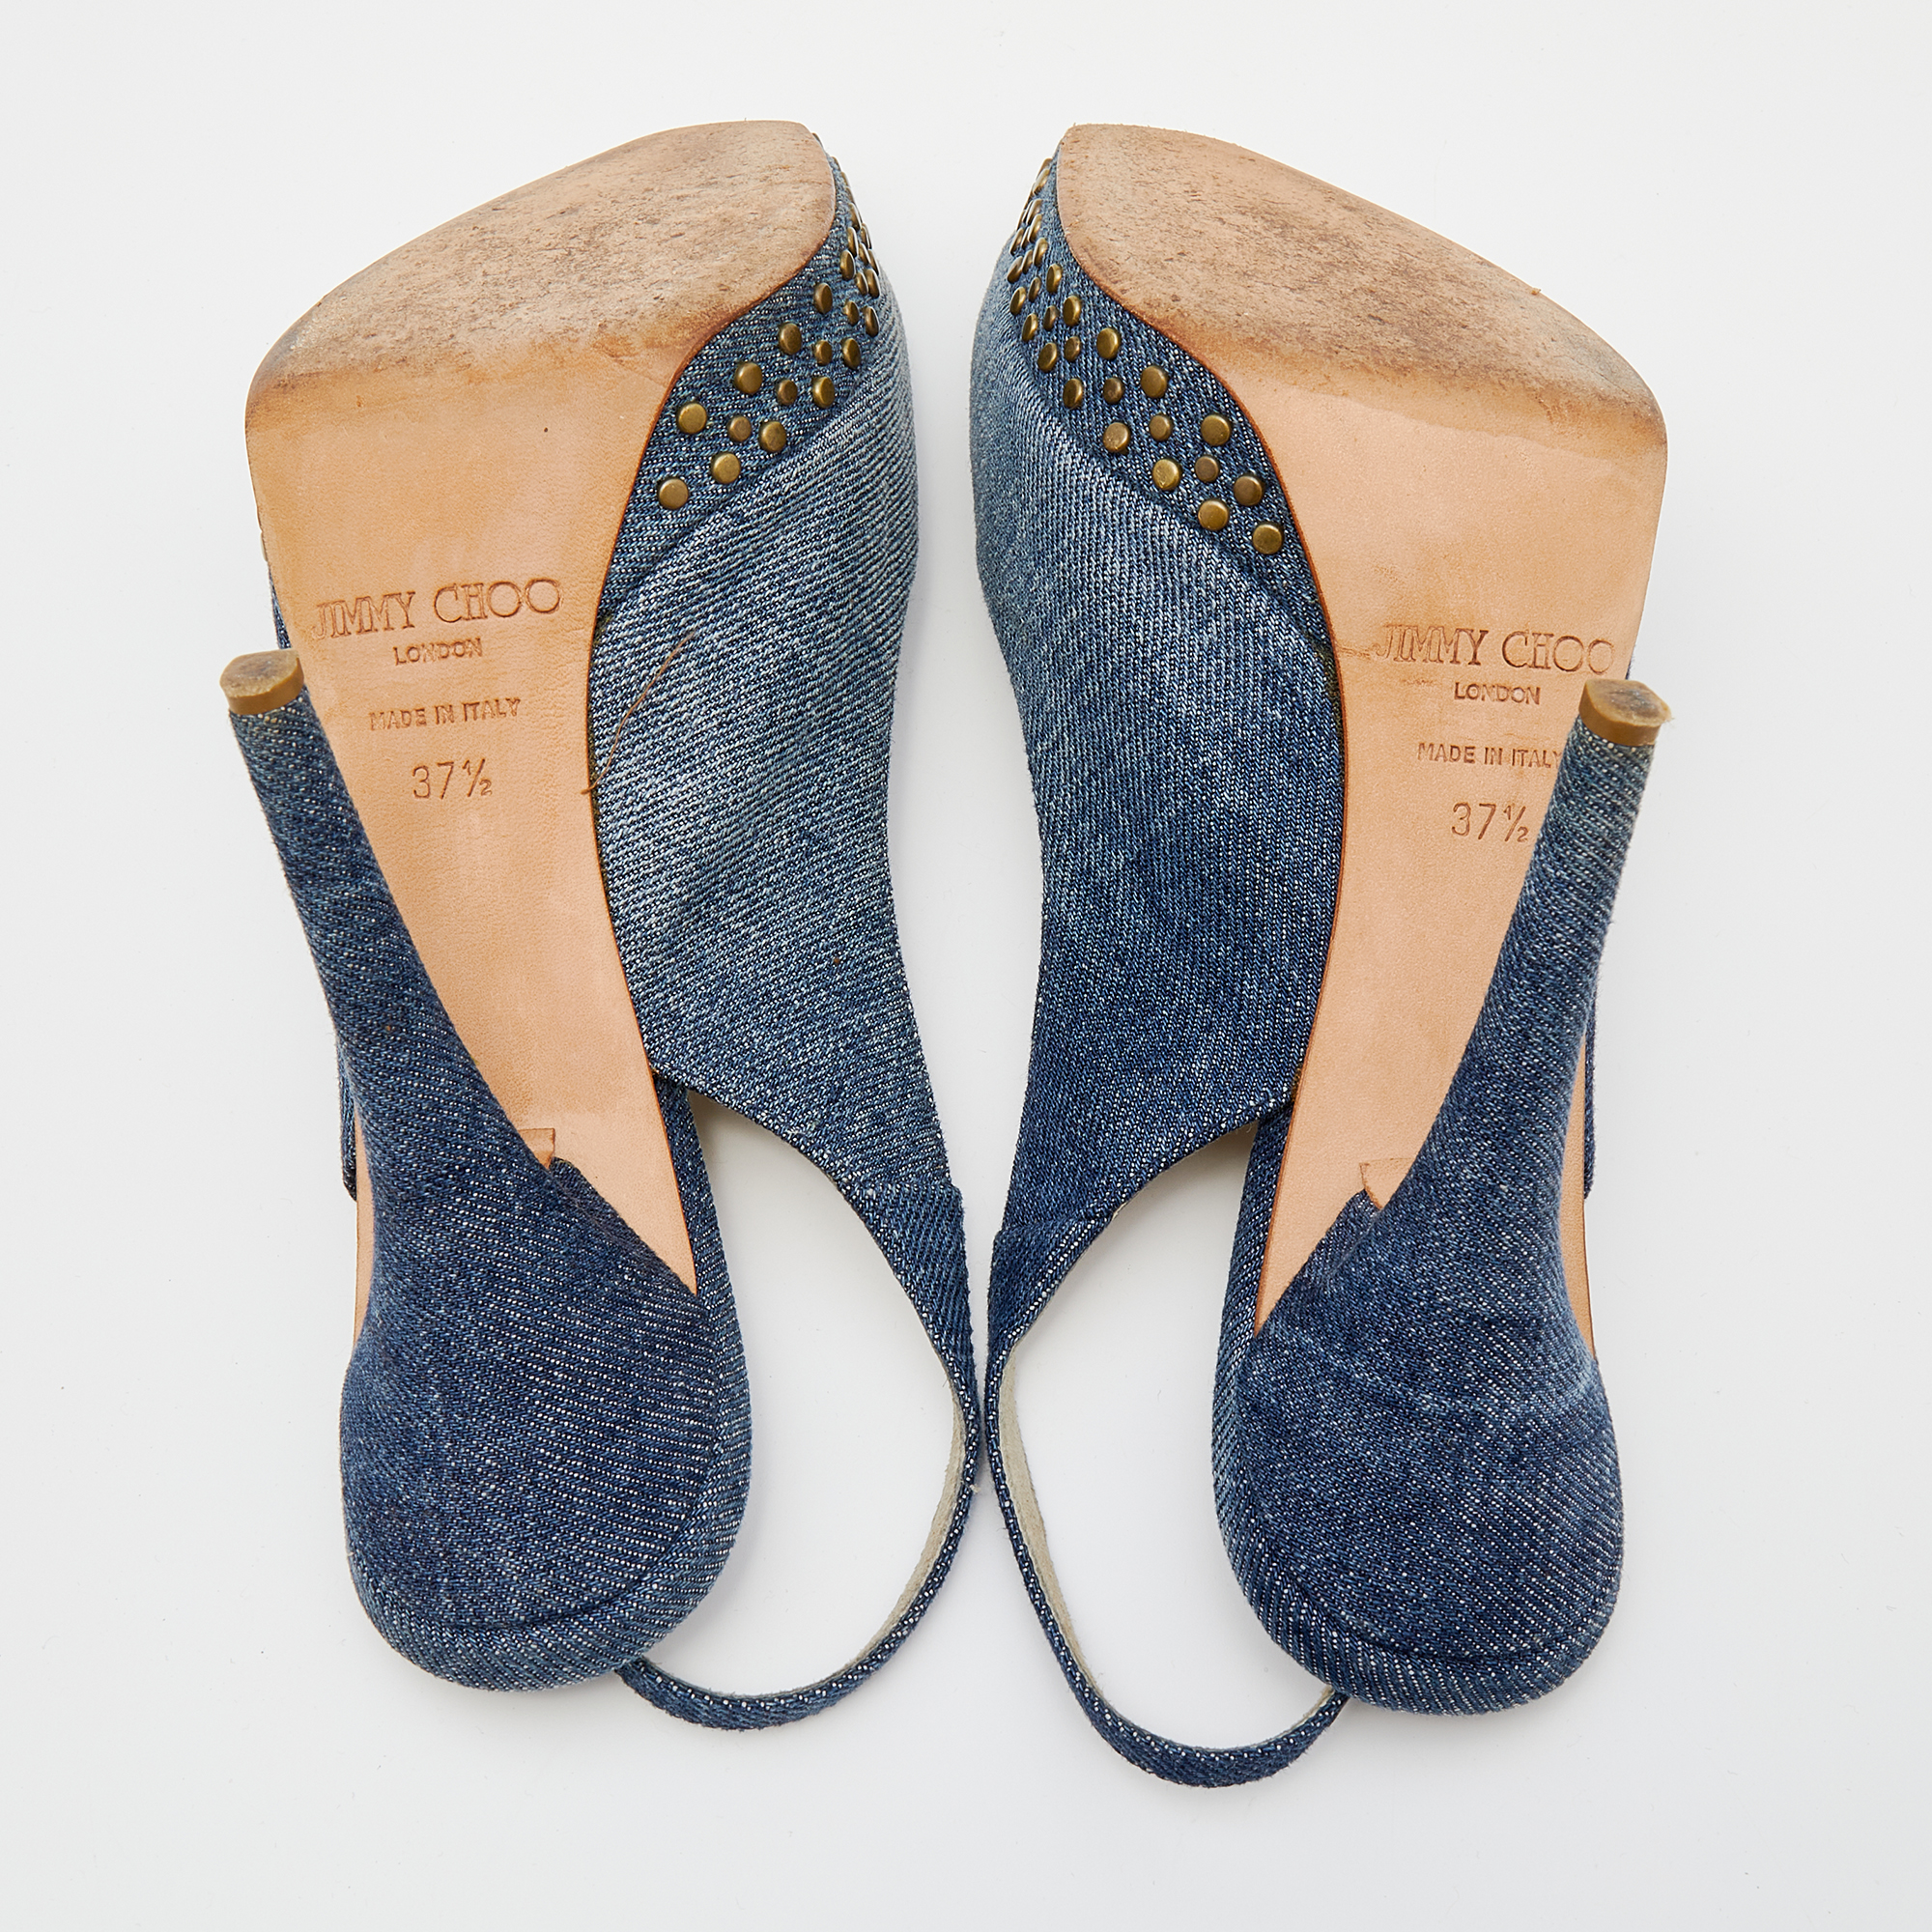 Jimmy Choo Blue Denim Peep Toe Slingback Sandals Size 37.5